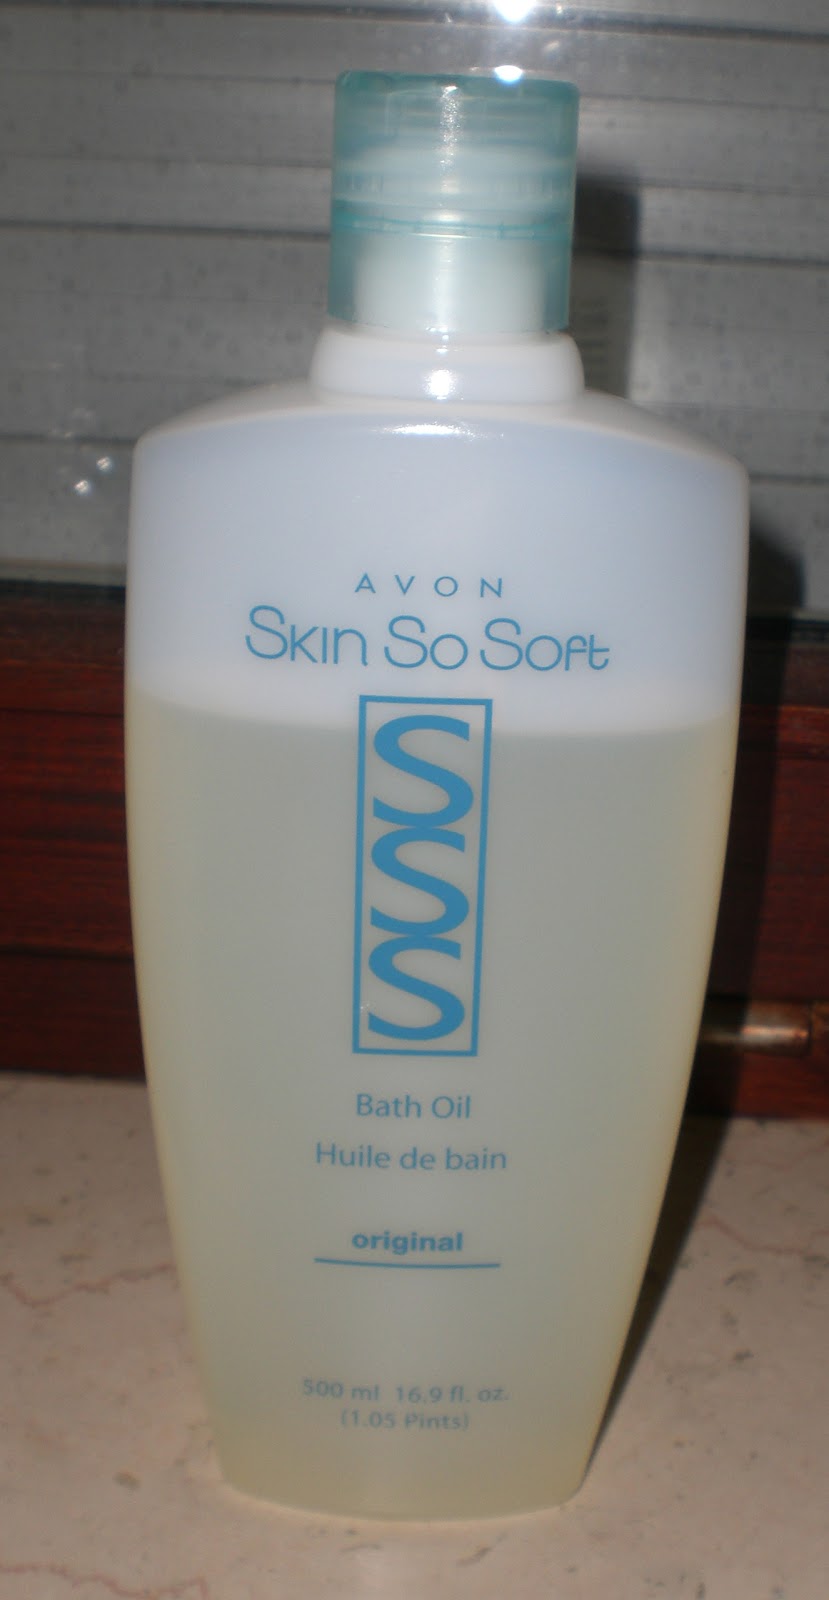 Cotton Candy Fro: AVON Skin So Soft Bath Oil